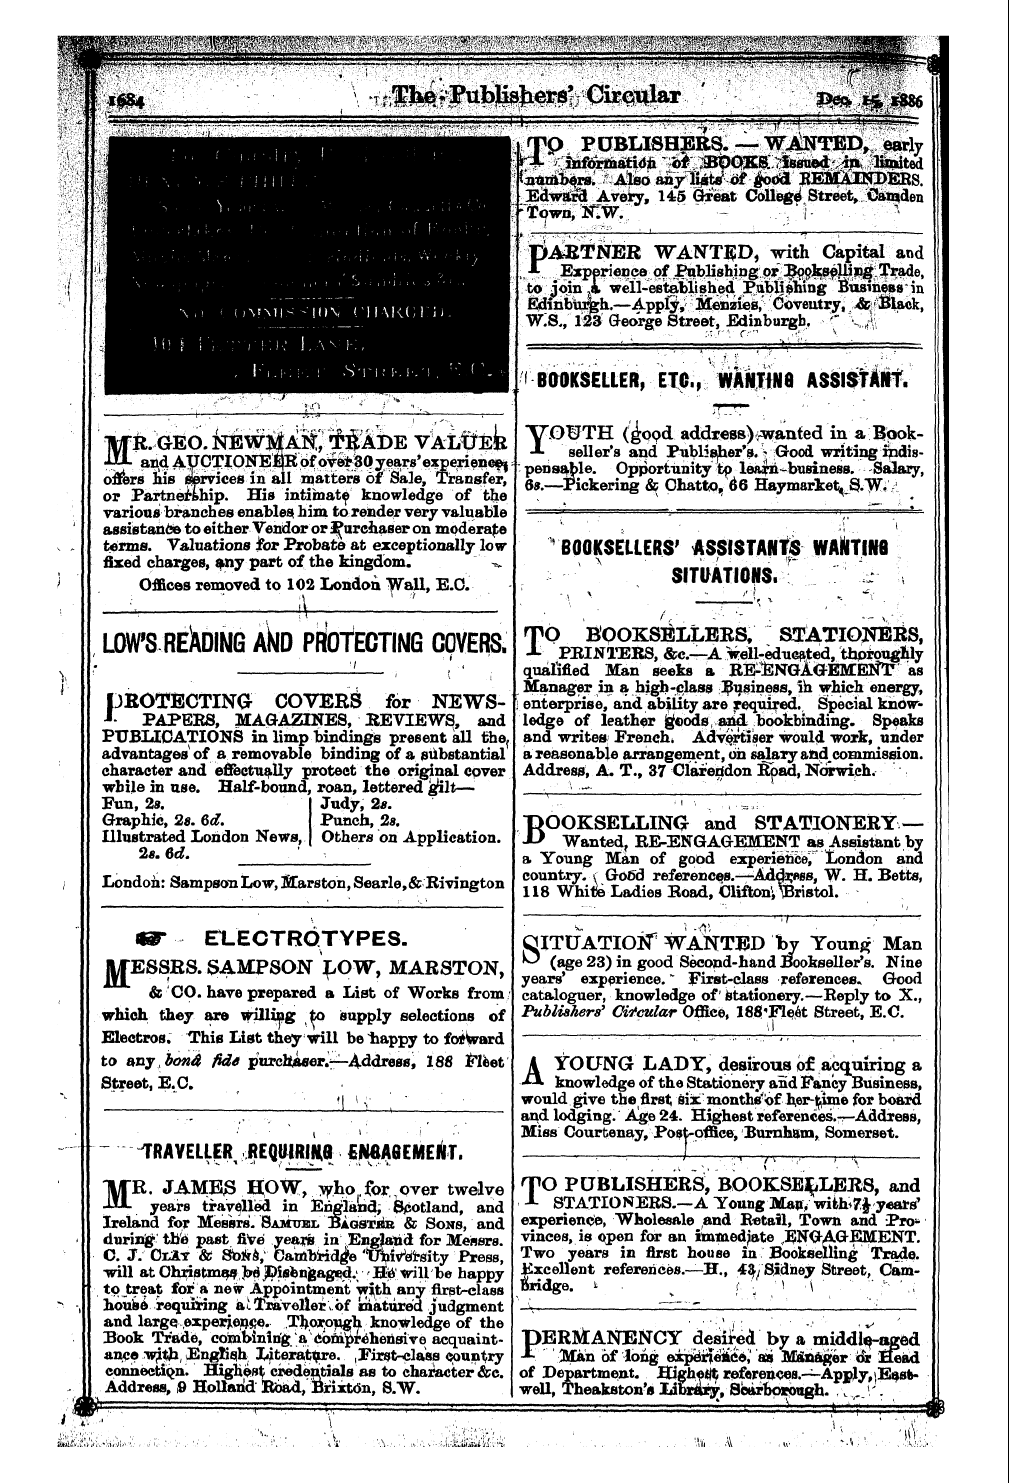 Publishers’ Circular (1880-1890): jS F Y, 1st edition - Ad04807